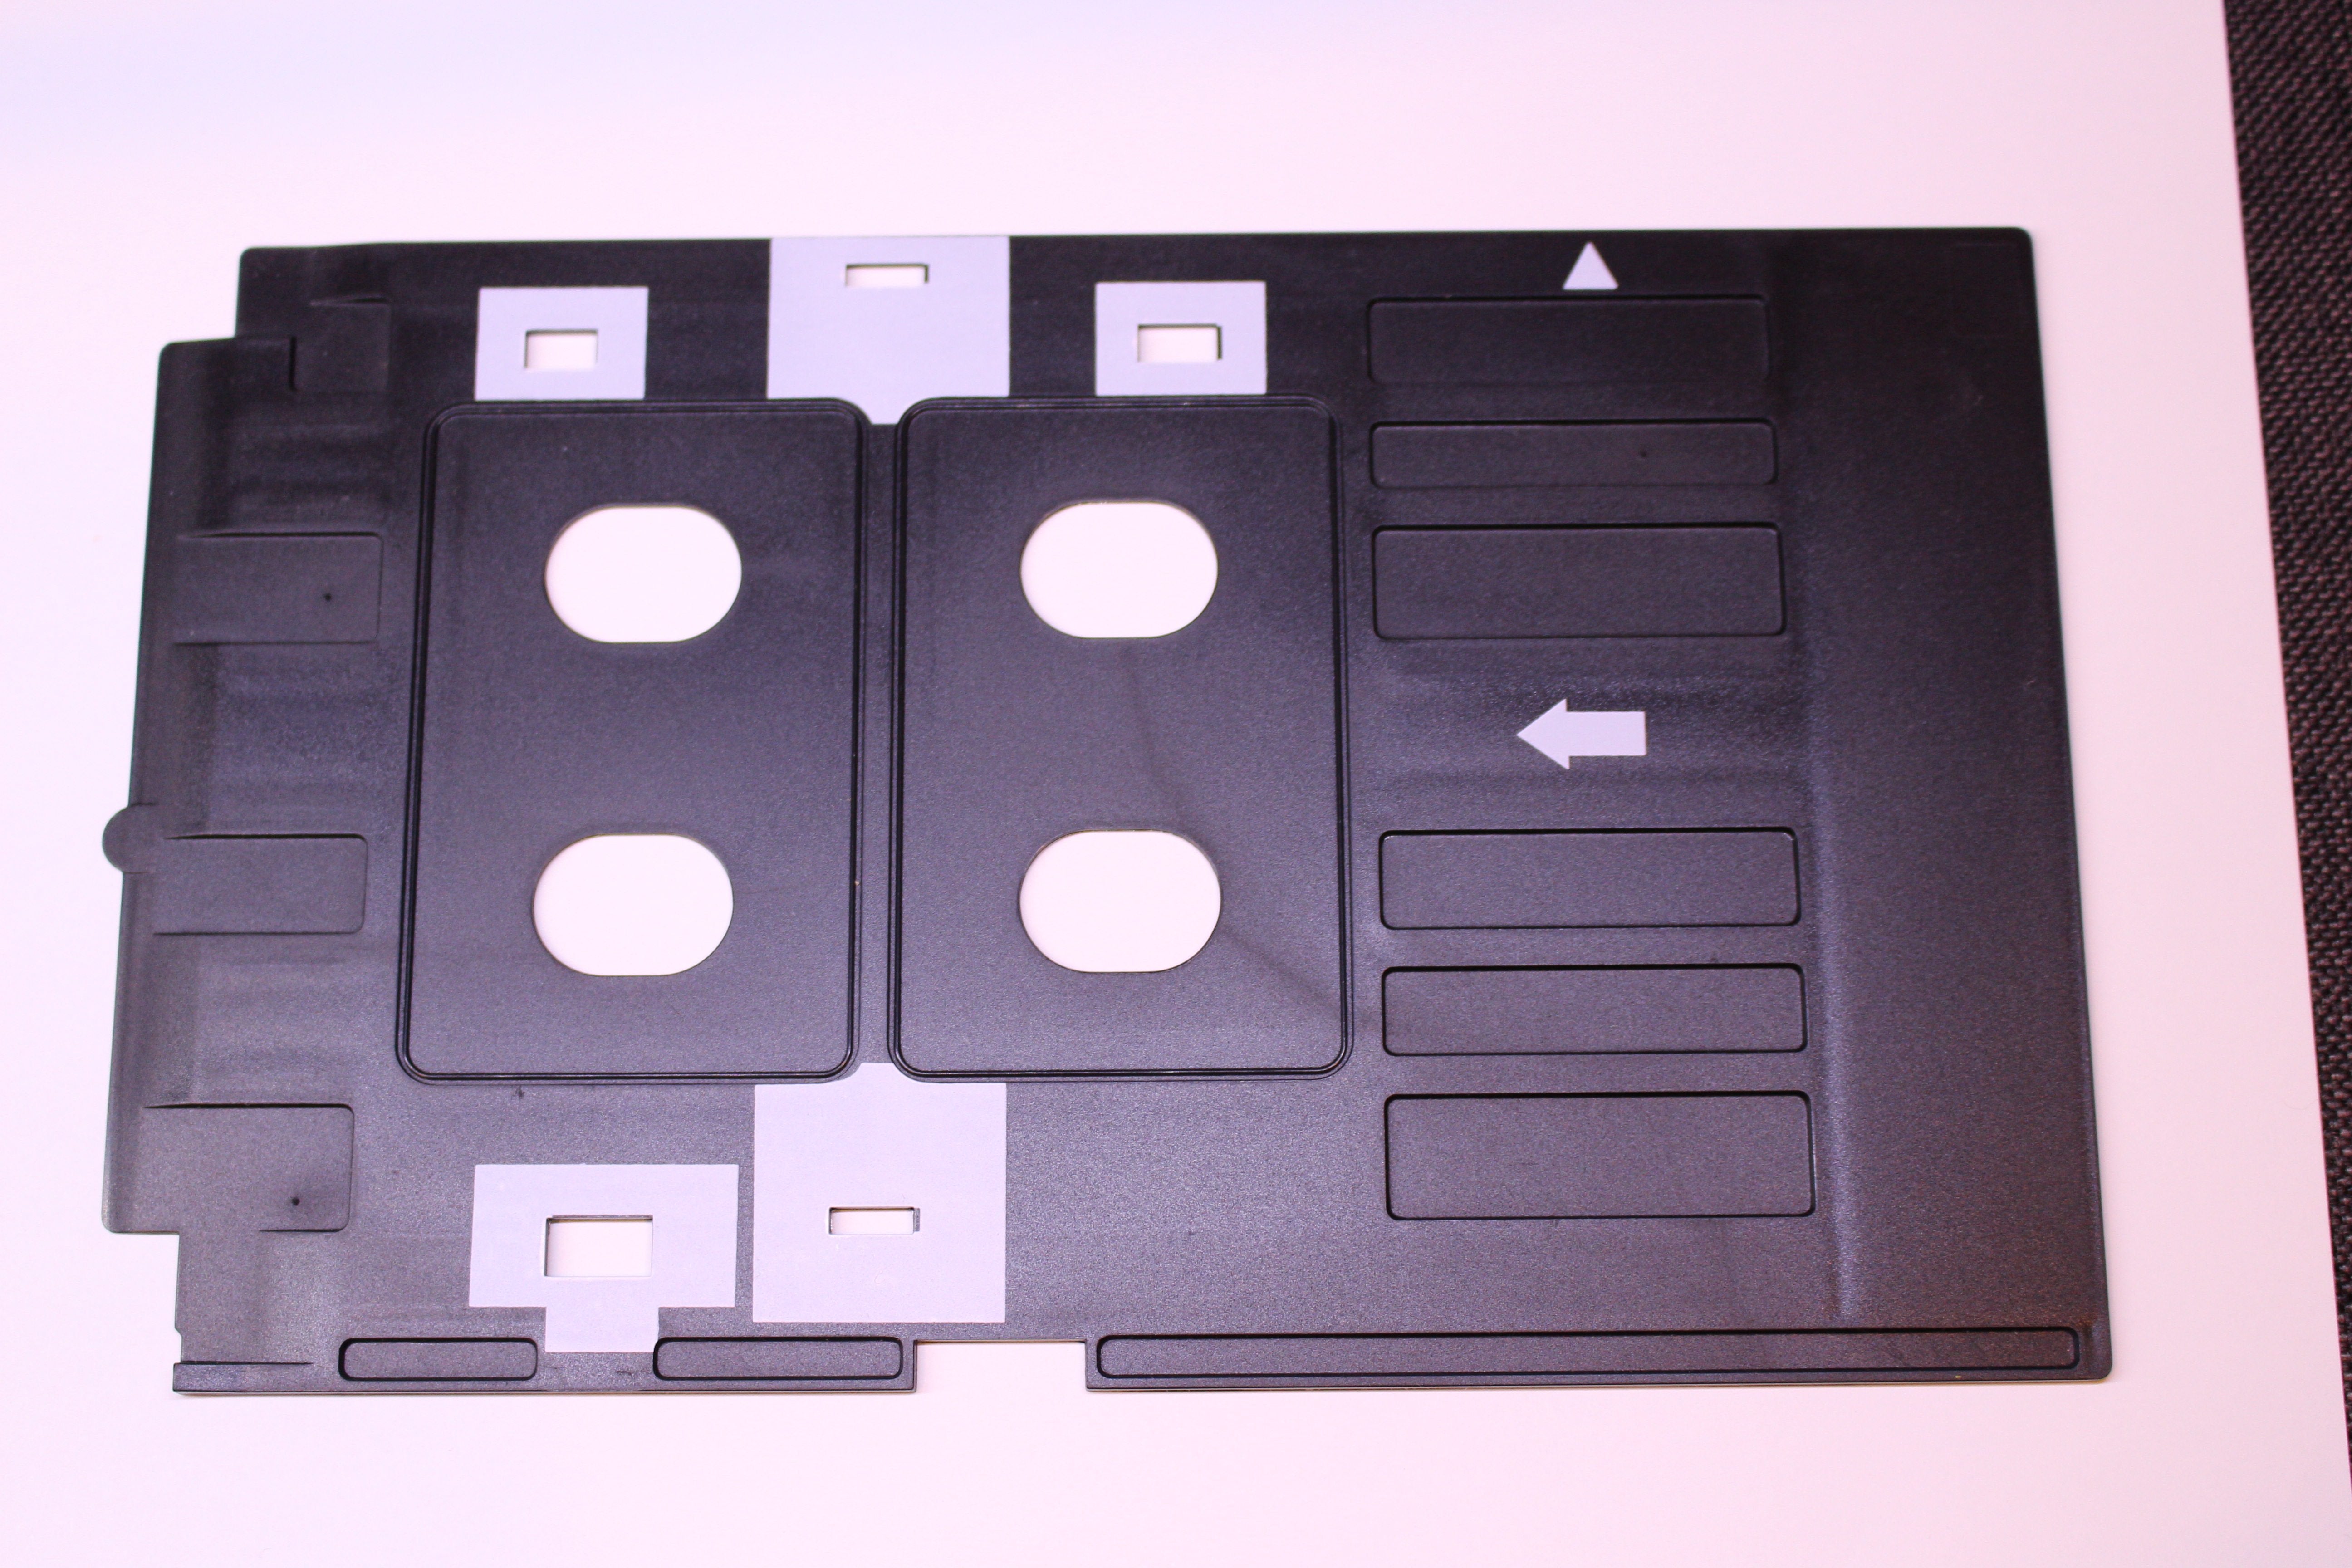 Epson R280 Printer Tray for printable NFC cards